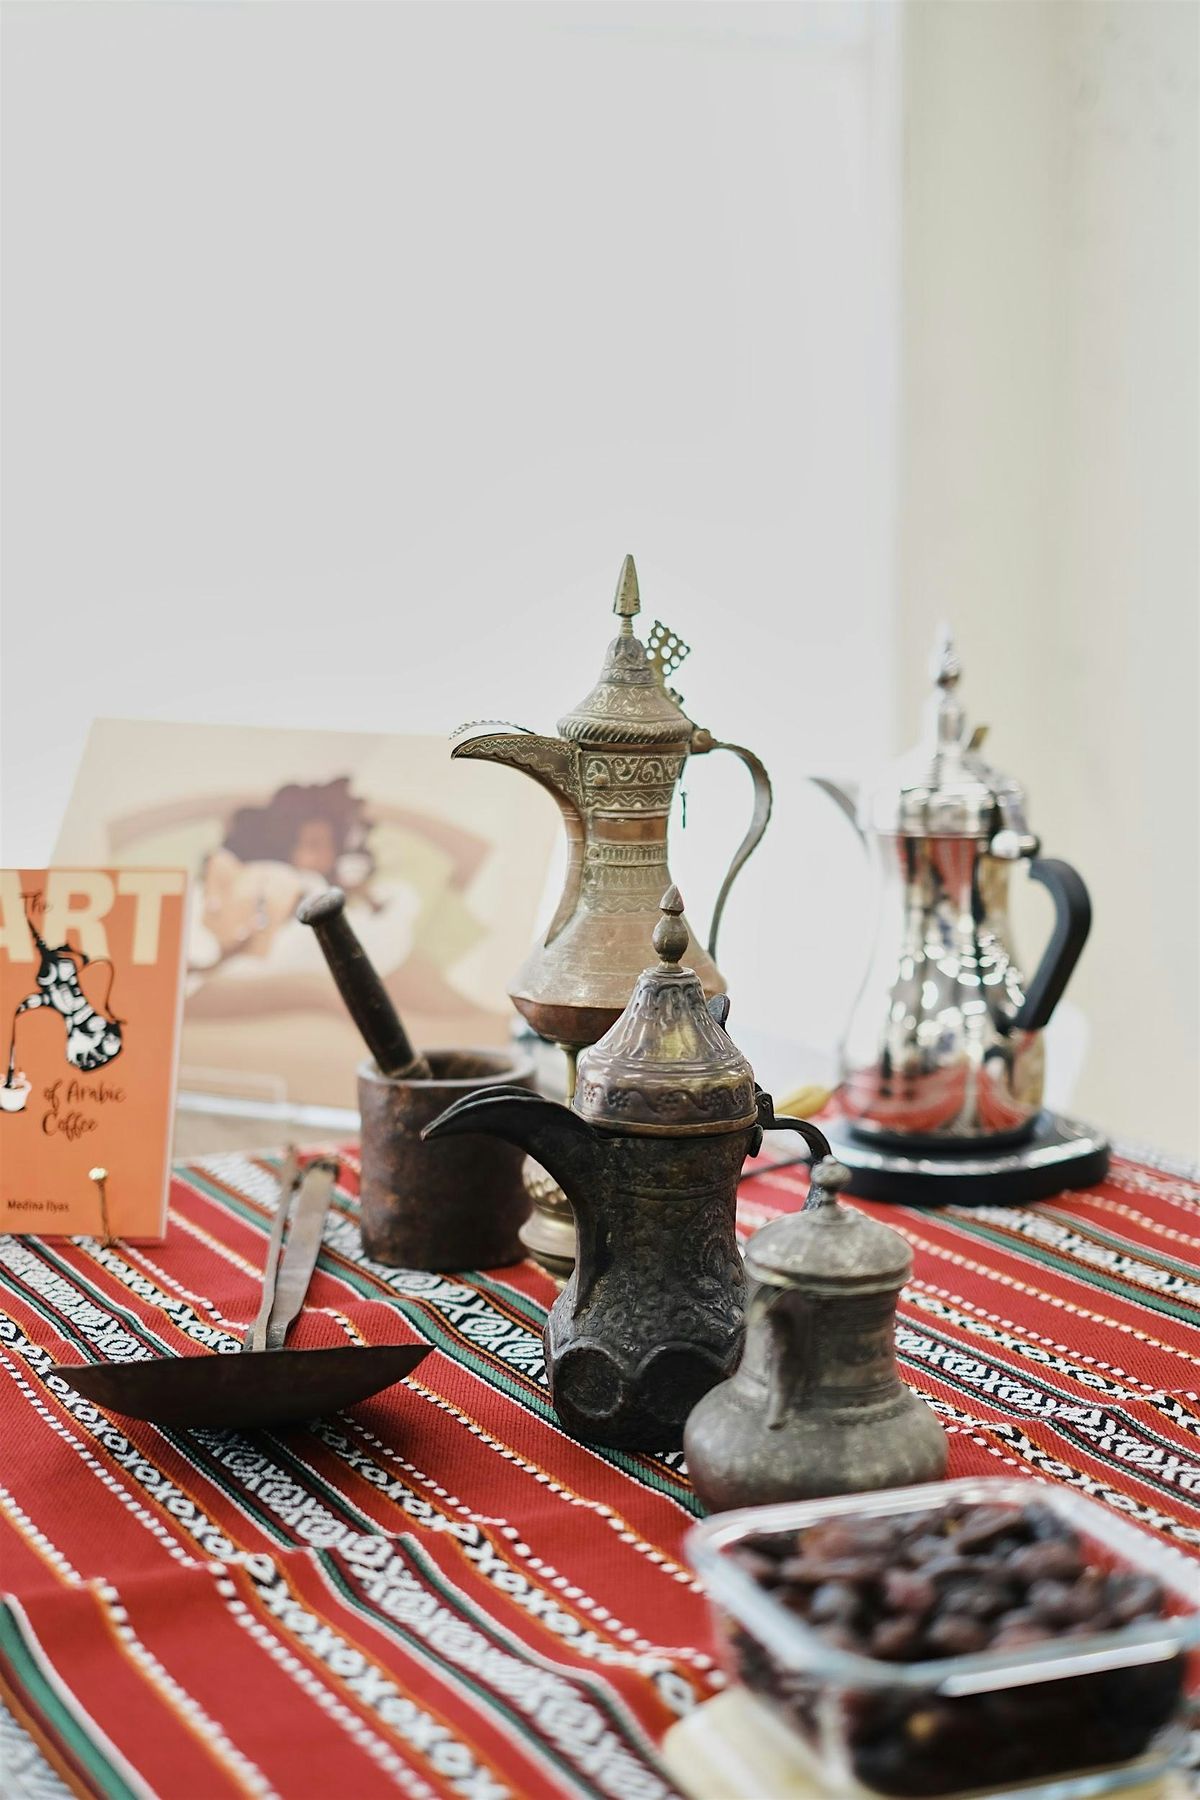 The Art of Arabic Coffee Workshop with Medina Ilyas